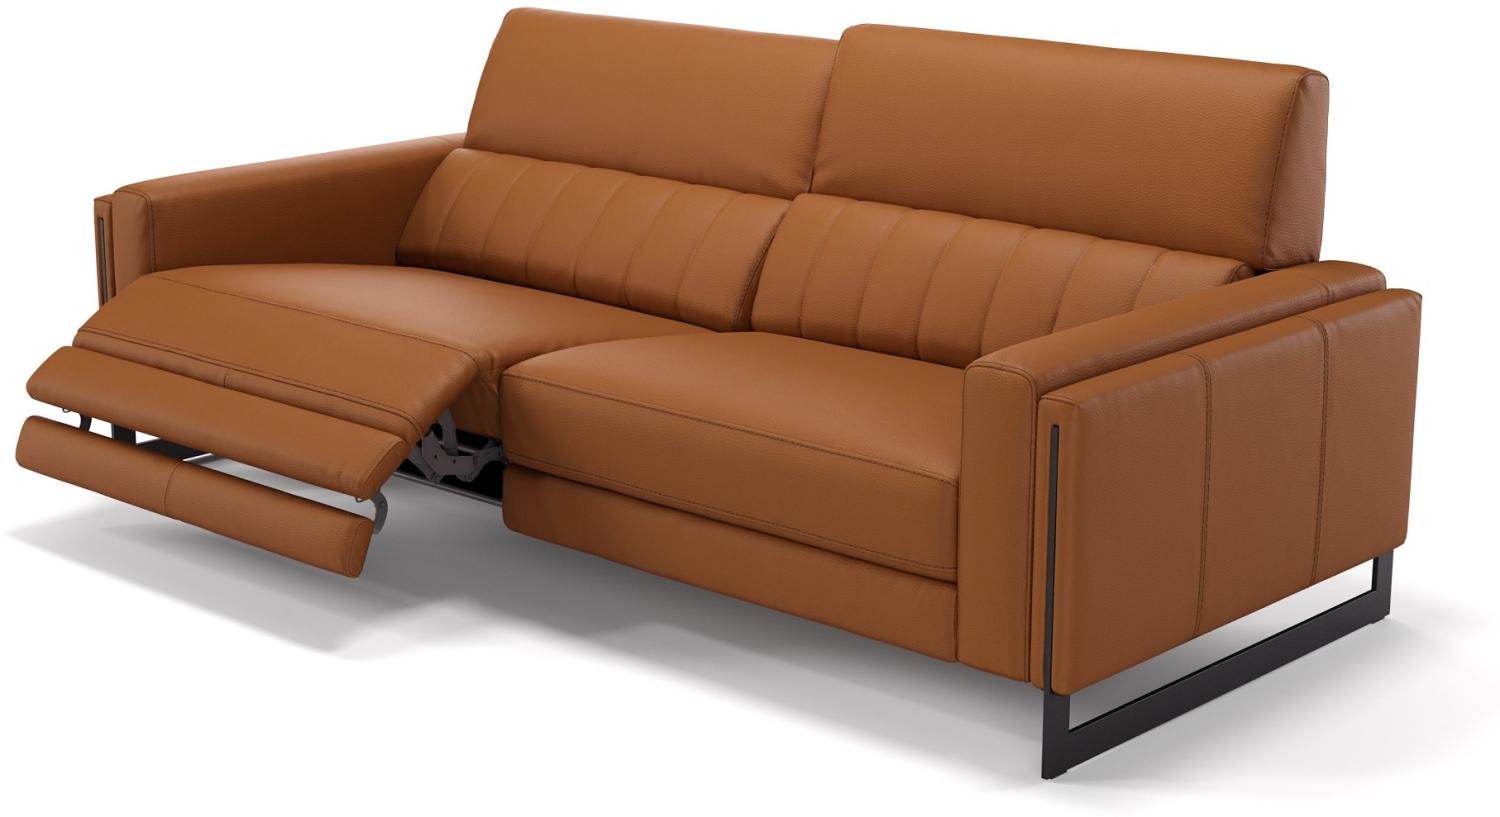 Sofanella 3-Sitzer MARA Leder Sofa Sofagarnitur in Cognac S: 216 Breite x 101 Tiefe Bild 1